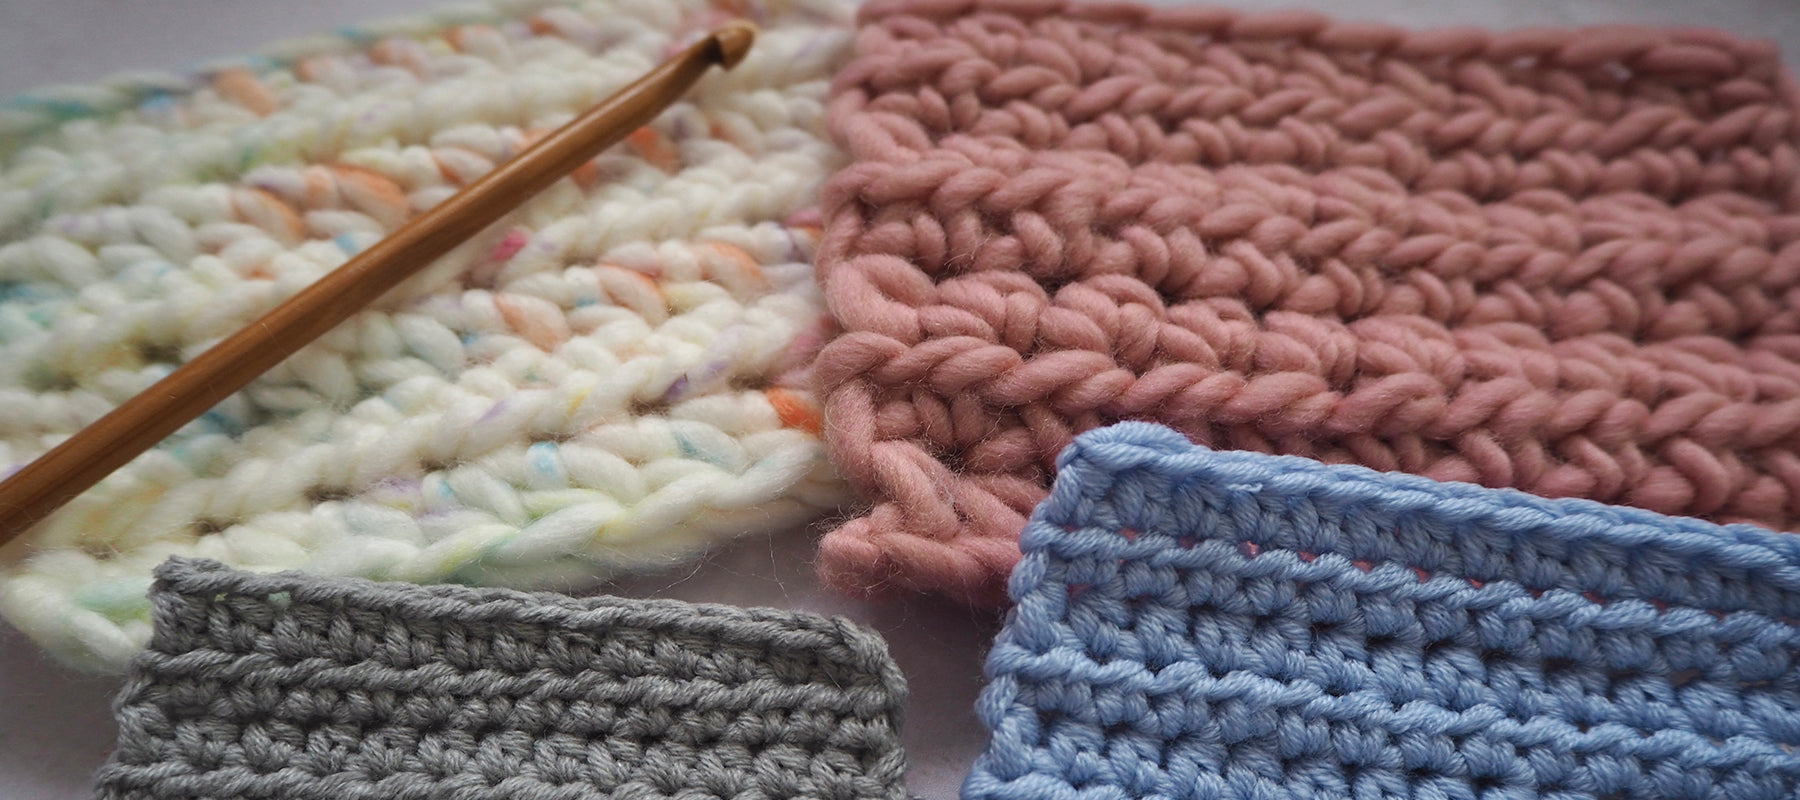 How Do You Match A Crochet Hook To Your Yarn? – Darn Good Yarn